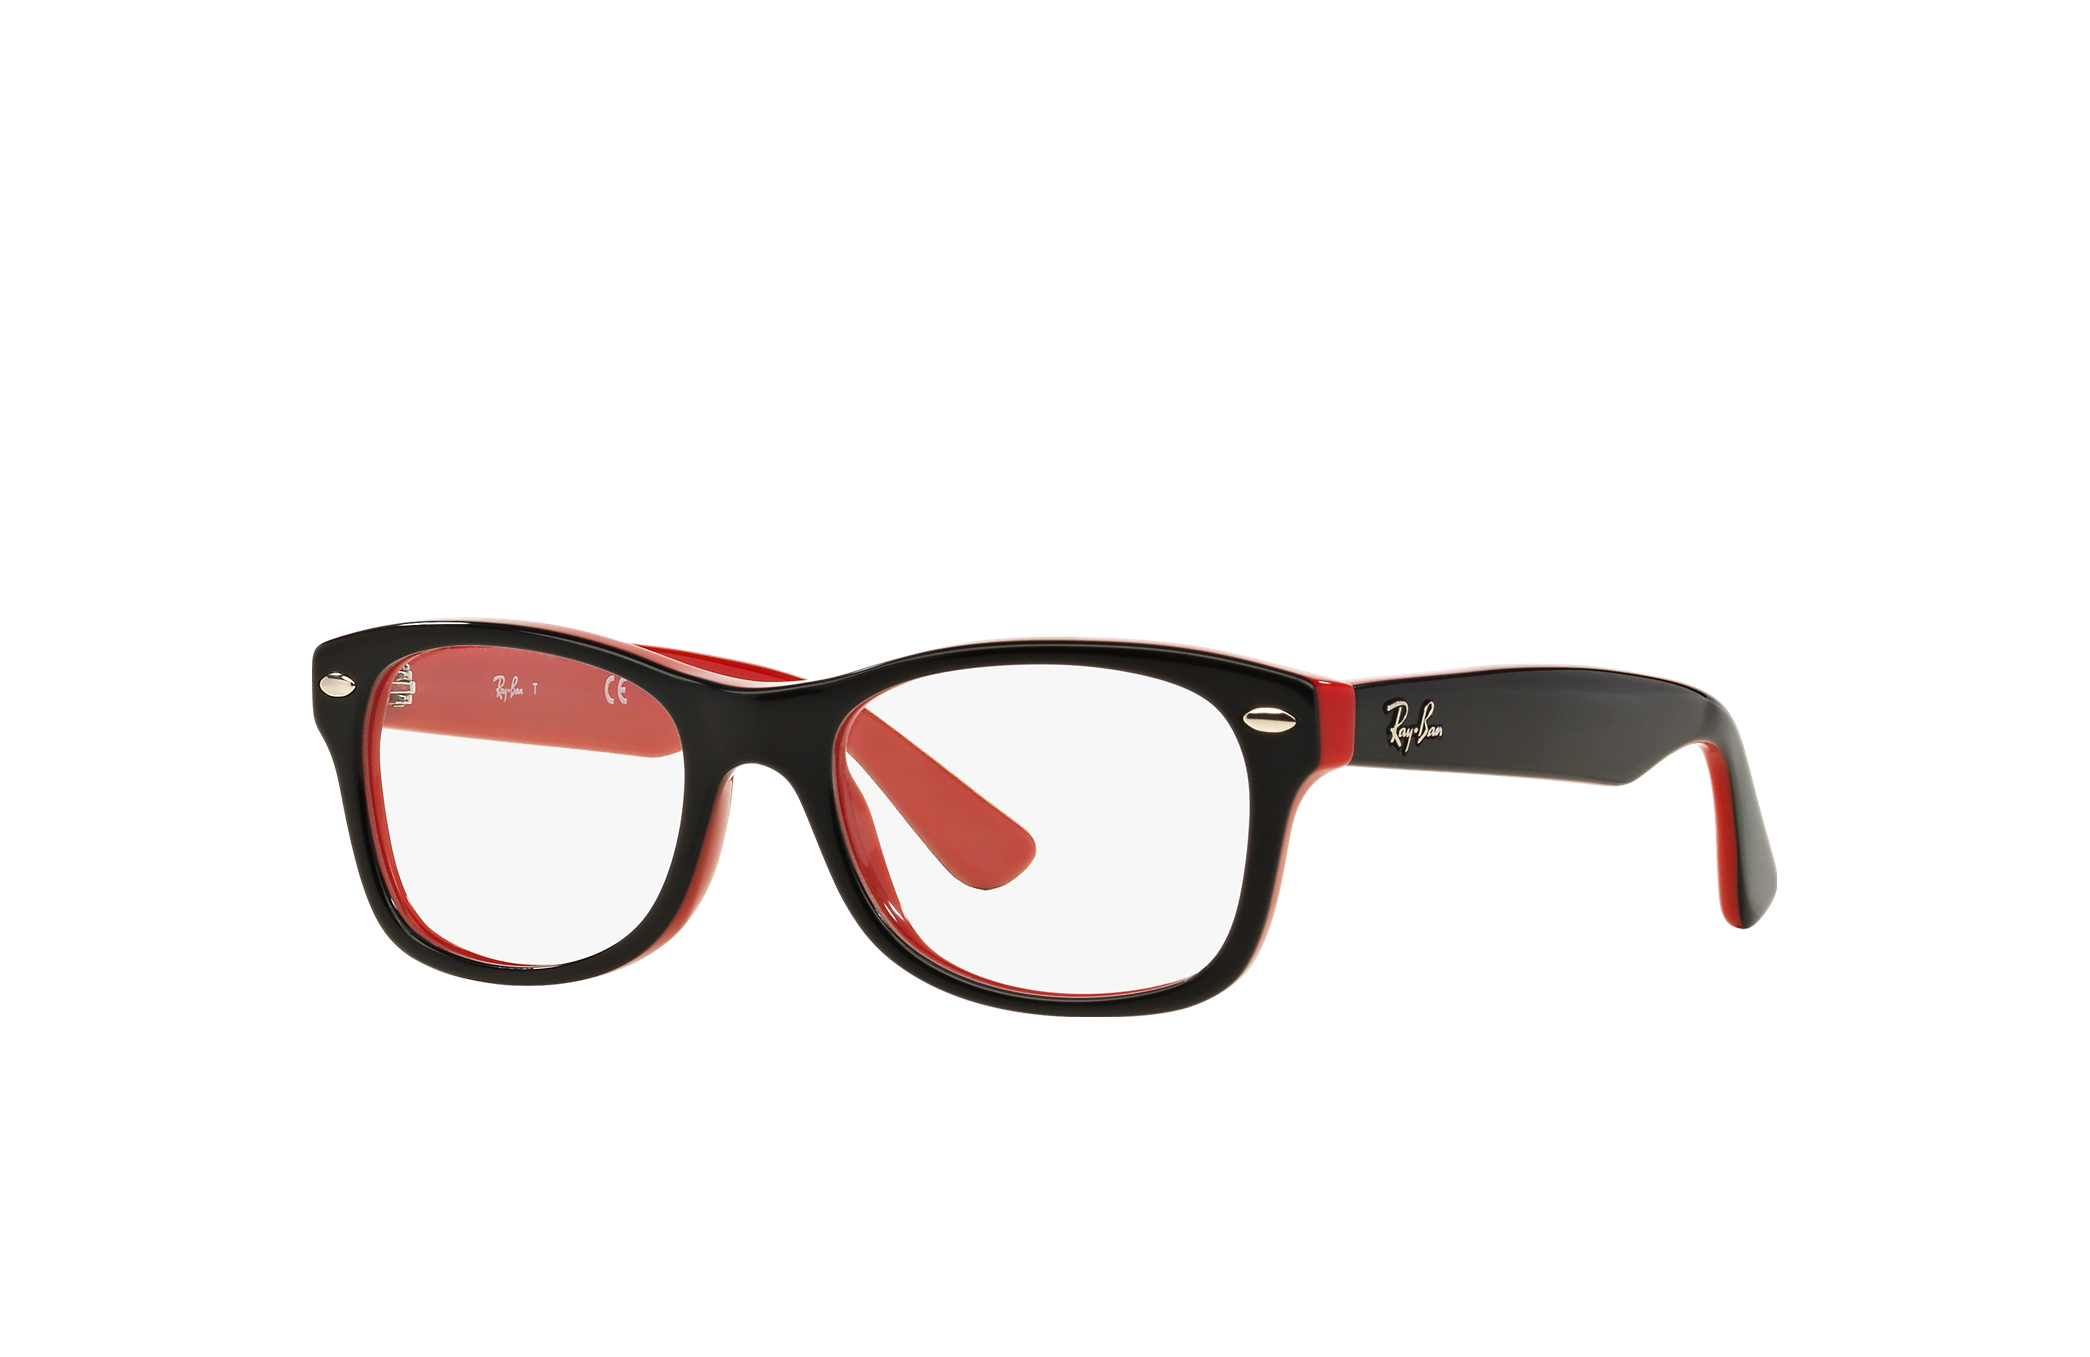 Rb1528 Optics Kids Eyeglasses with Top Black On Red Frame | Ray-Ban®